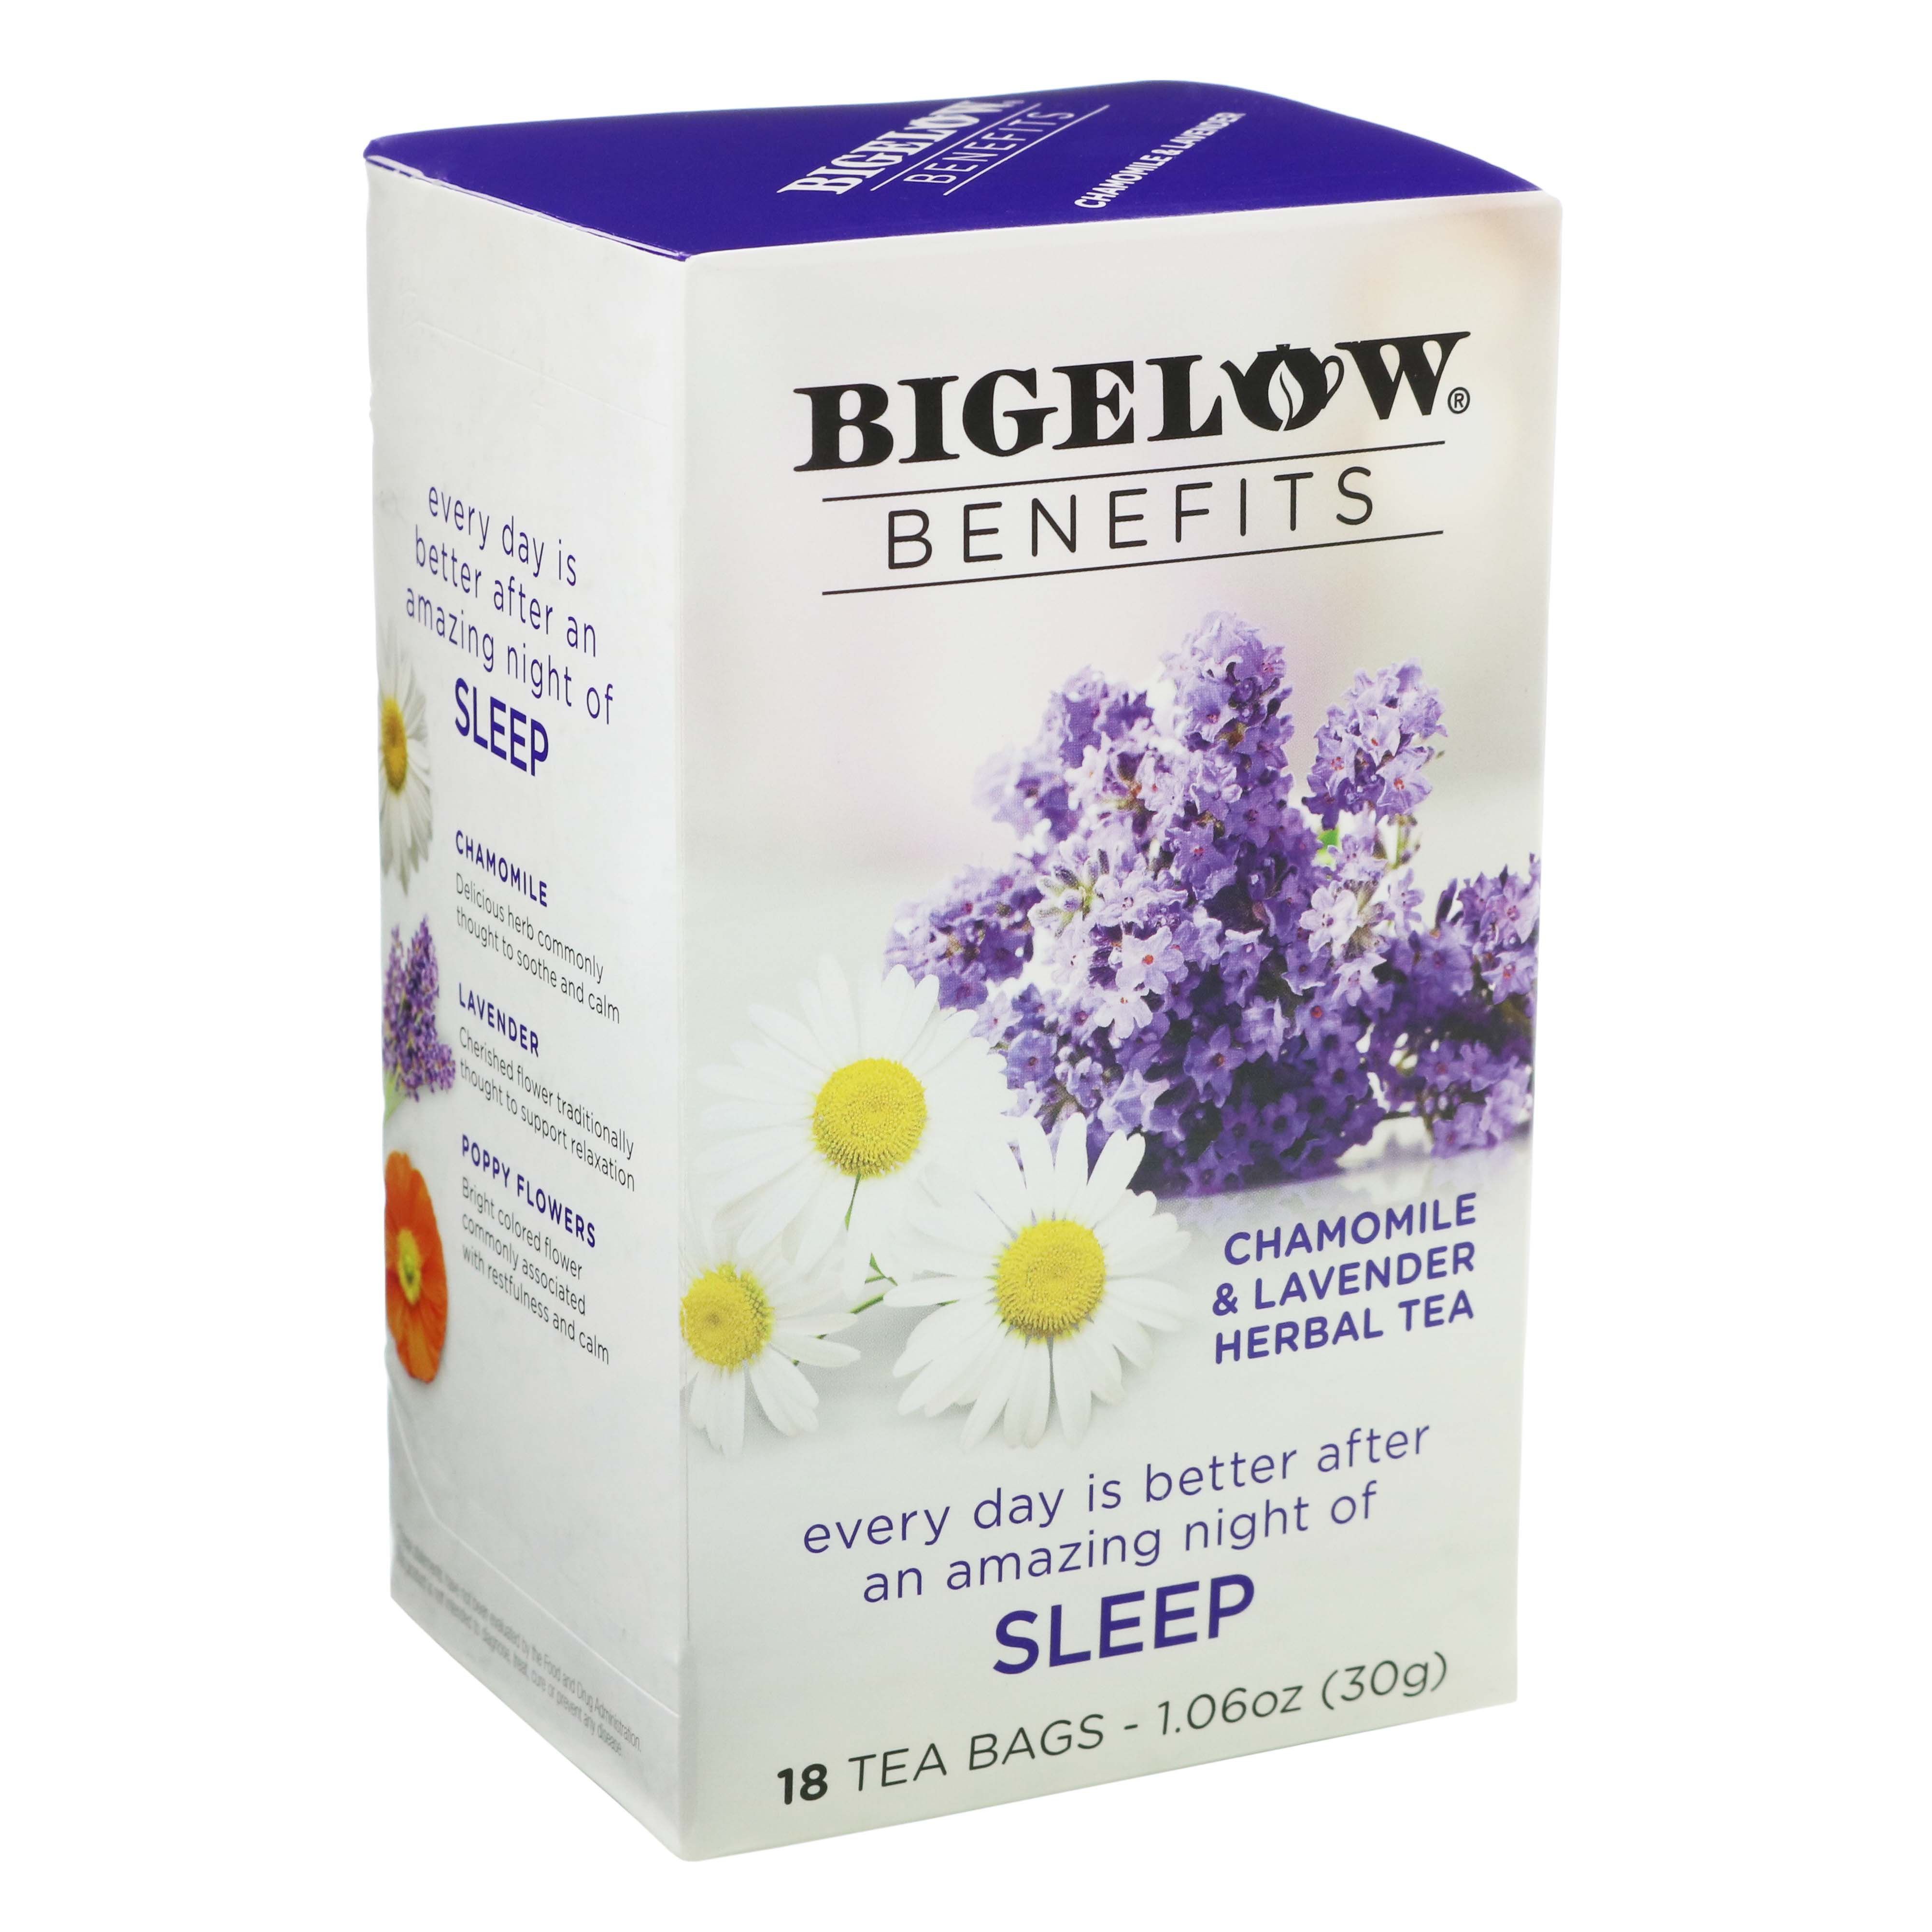 Bigelow Benefits Herbal Tea Chamomile Lavender - Shop Tea at H-E-B